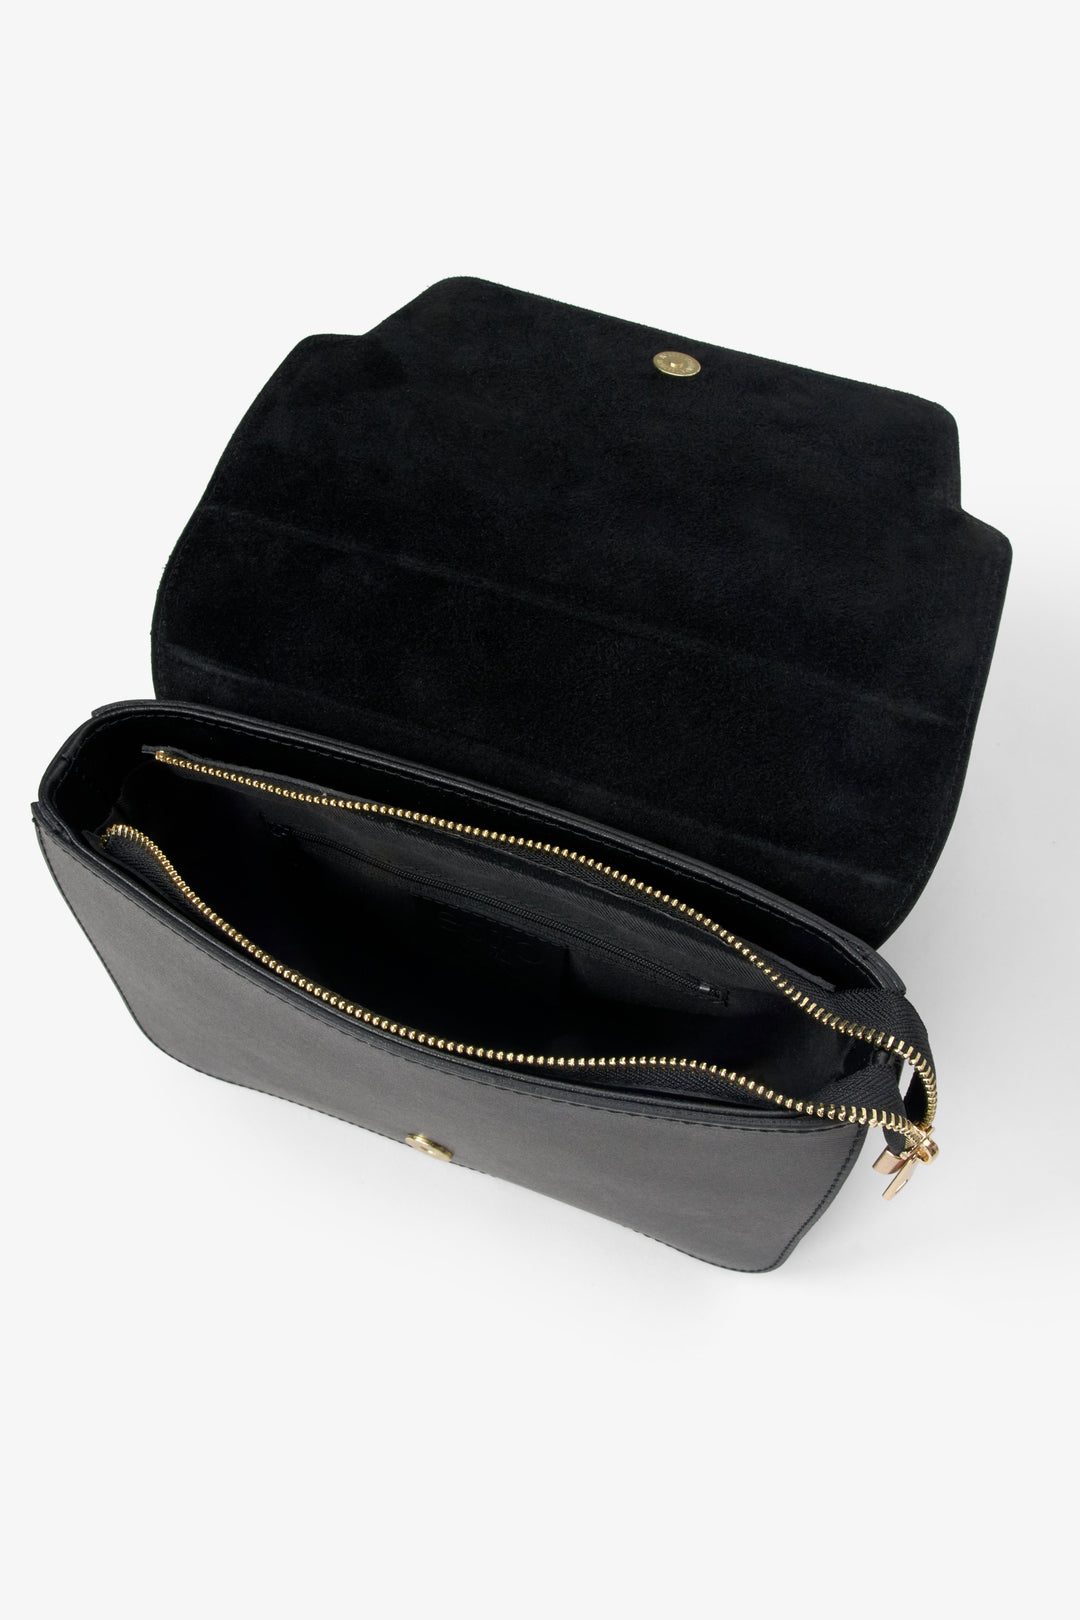 Women's black shoulder bag in Italian natural leather - textile lining.